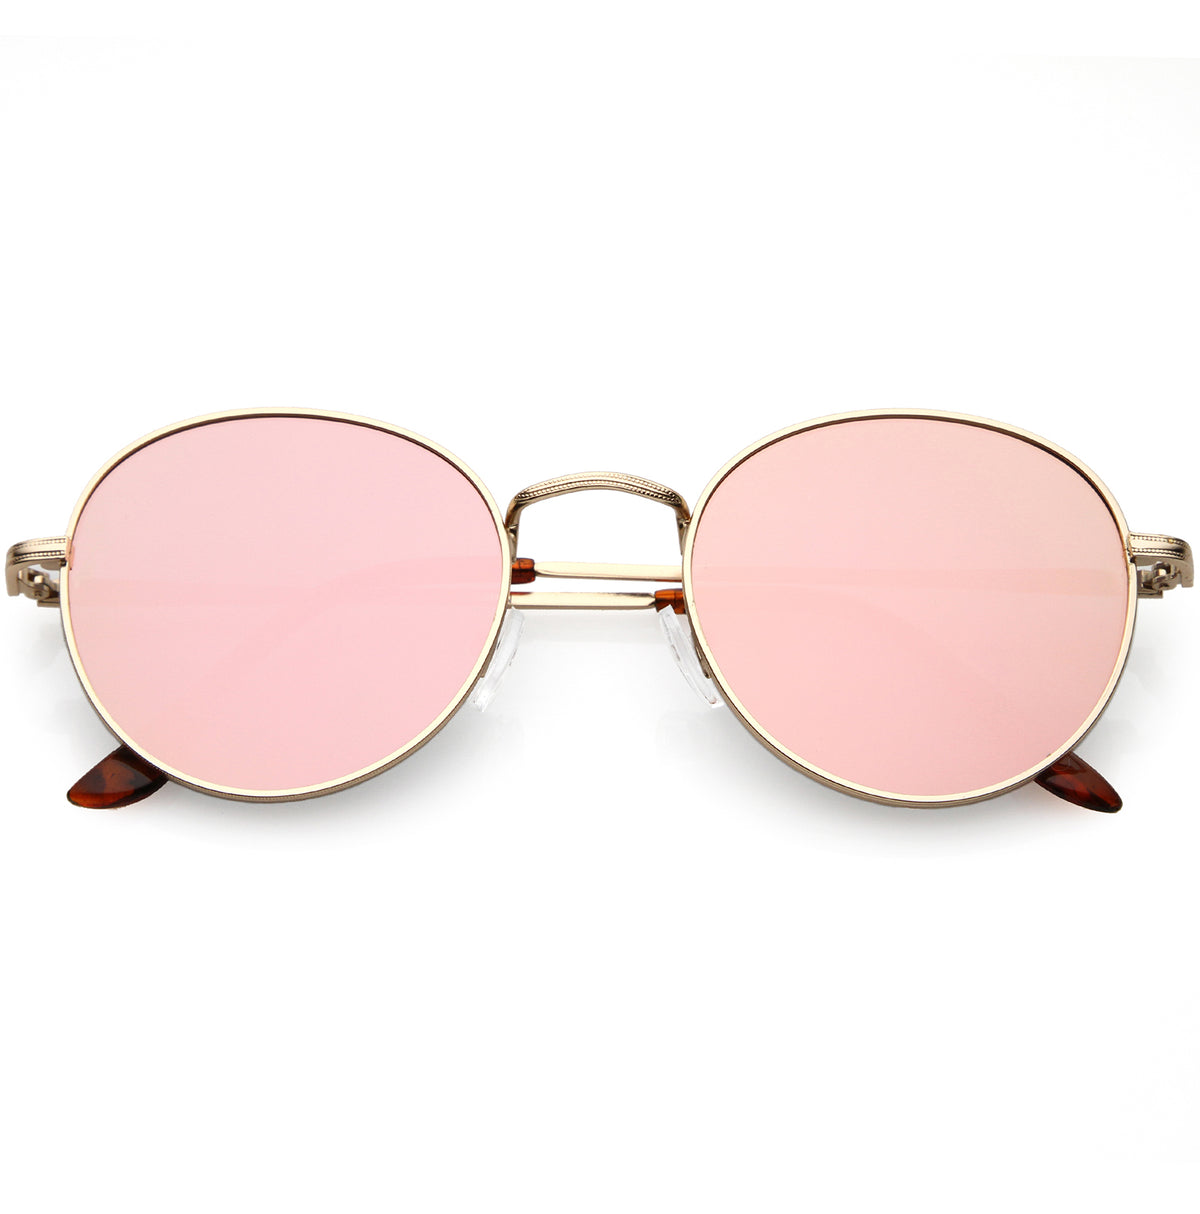 Classic Full Metal Round Sunglasses Slim Temple Color Mirrored Flat Le ...